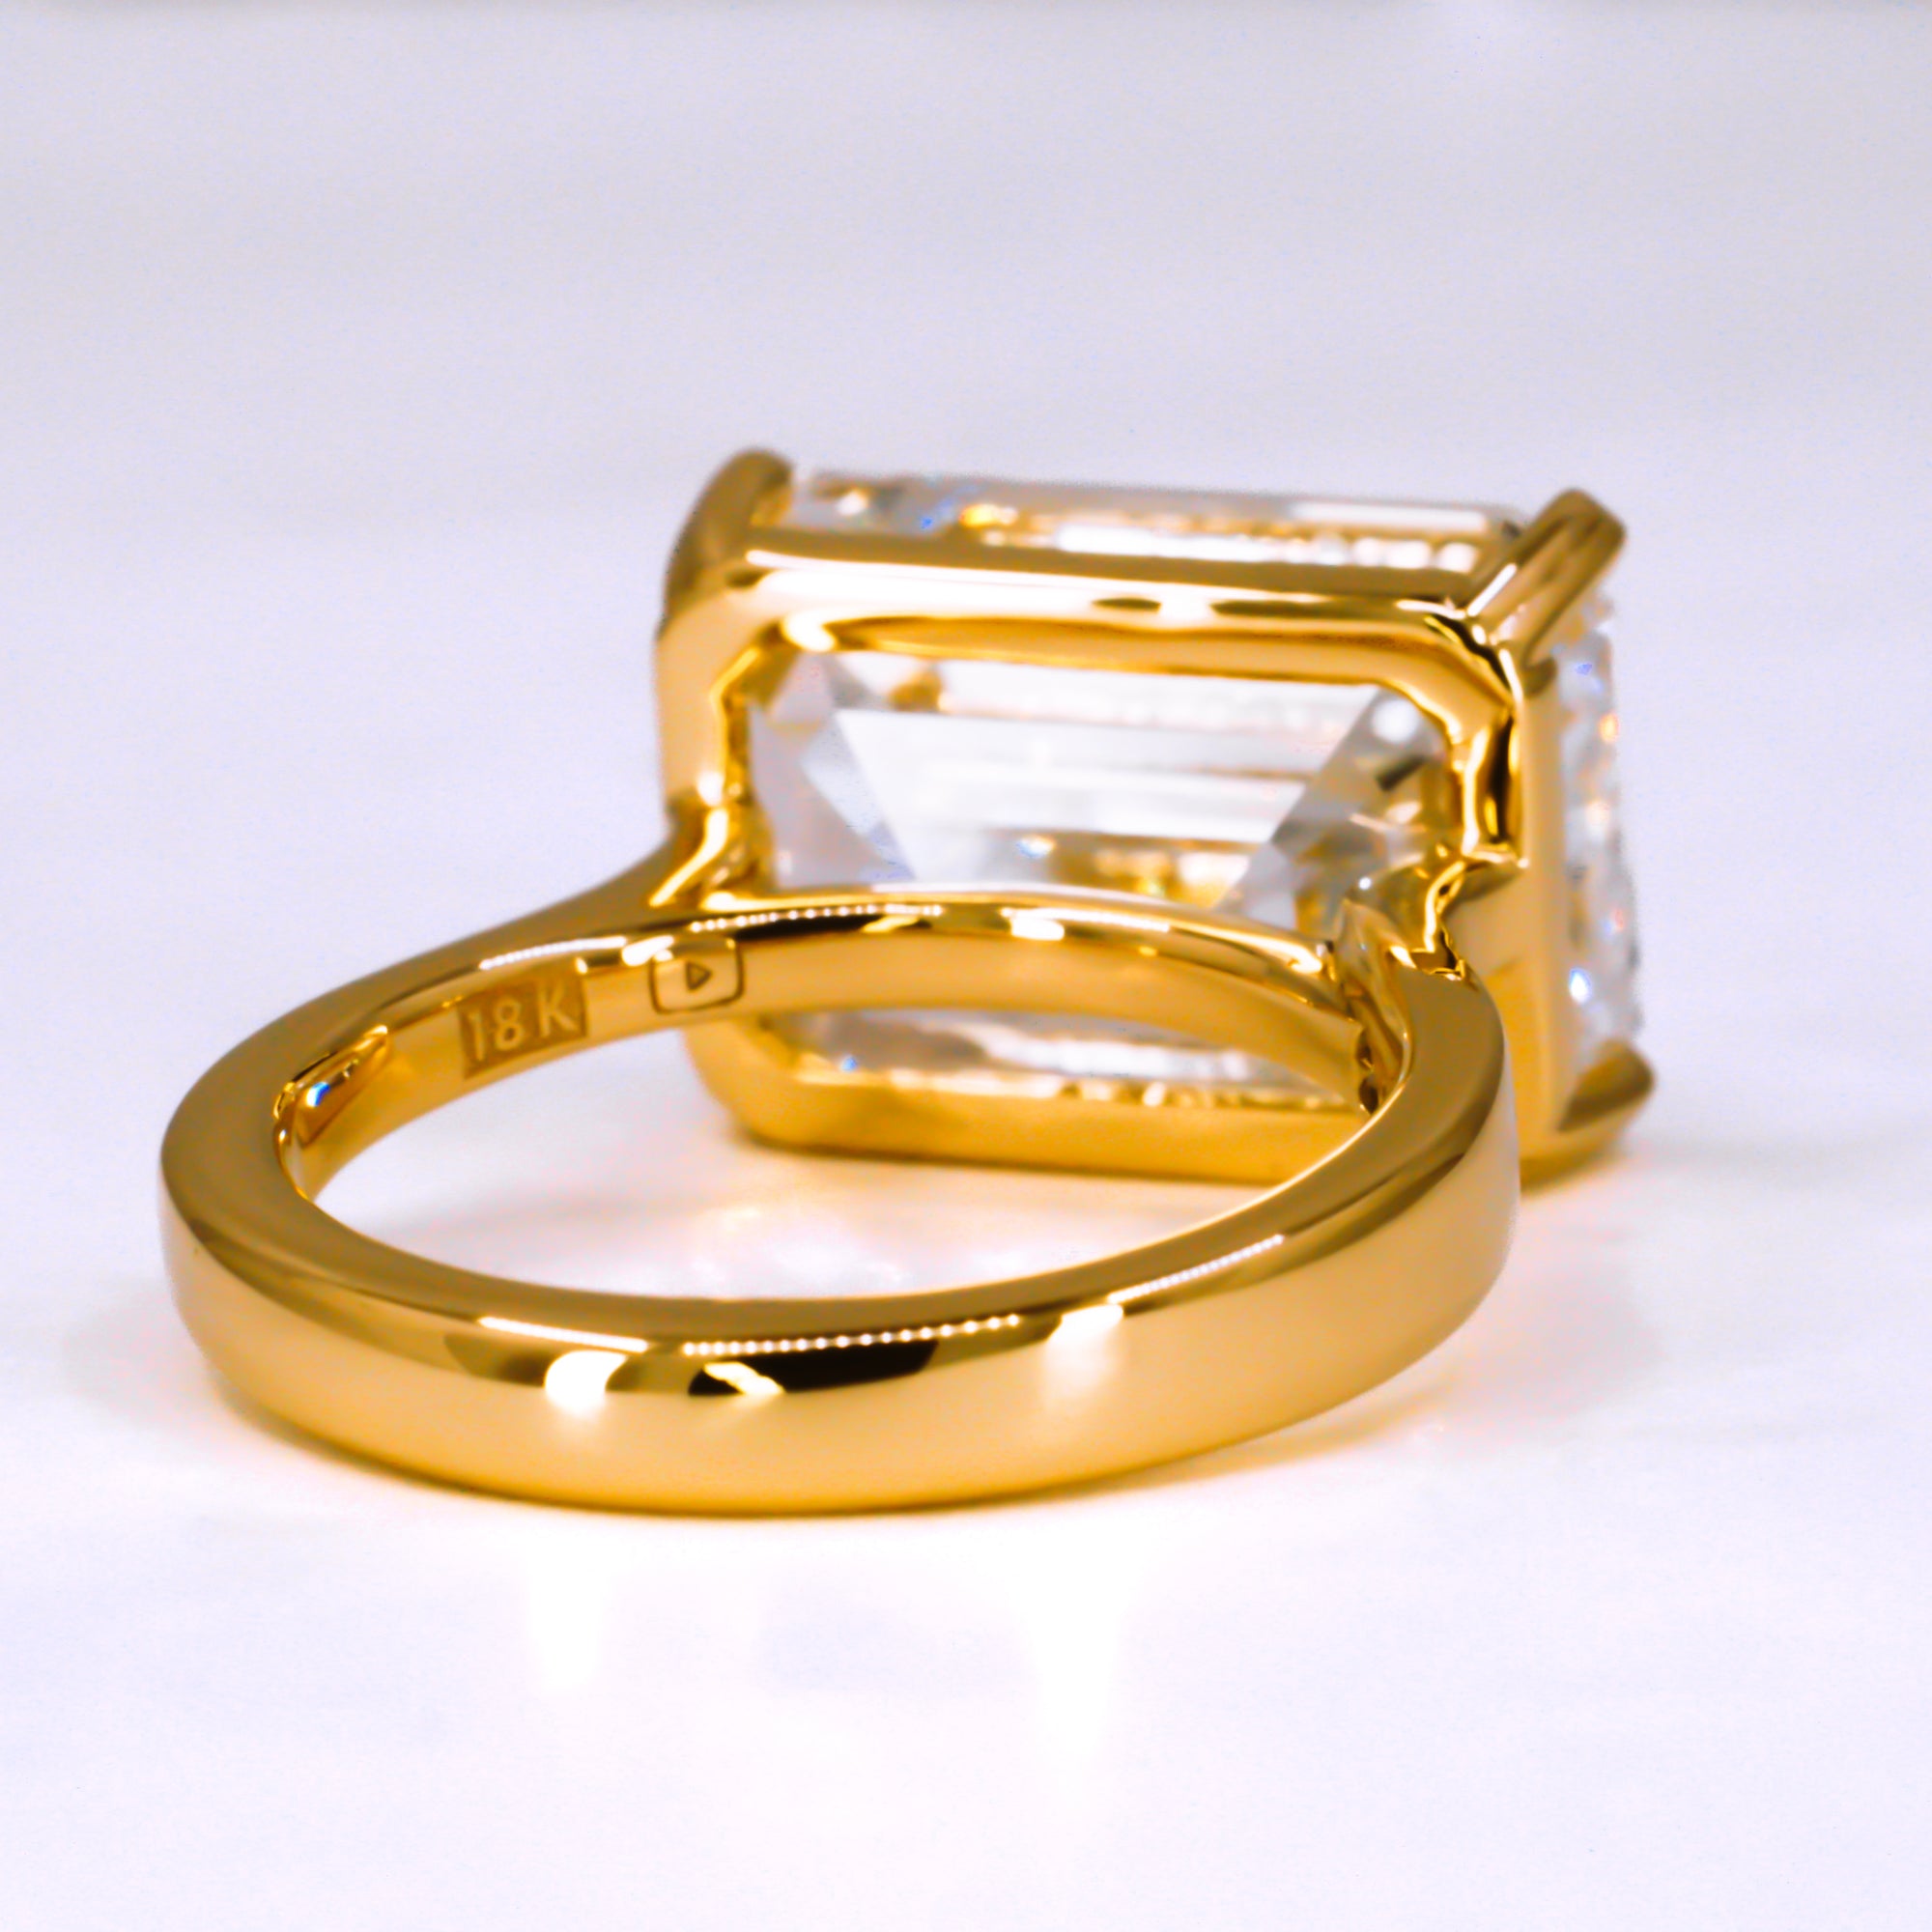 The Diamond Era Ring